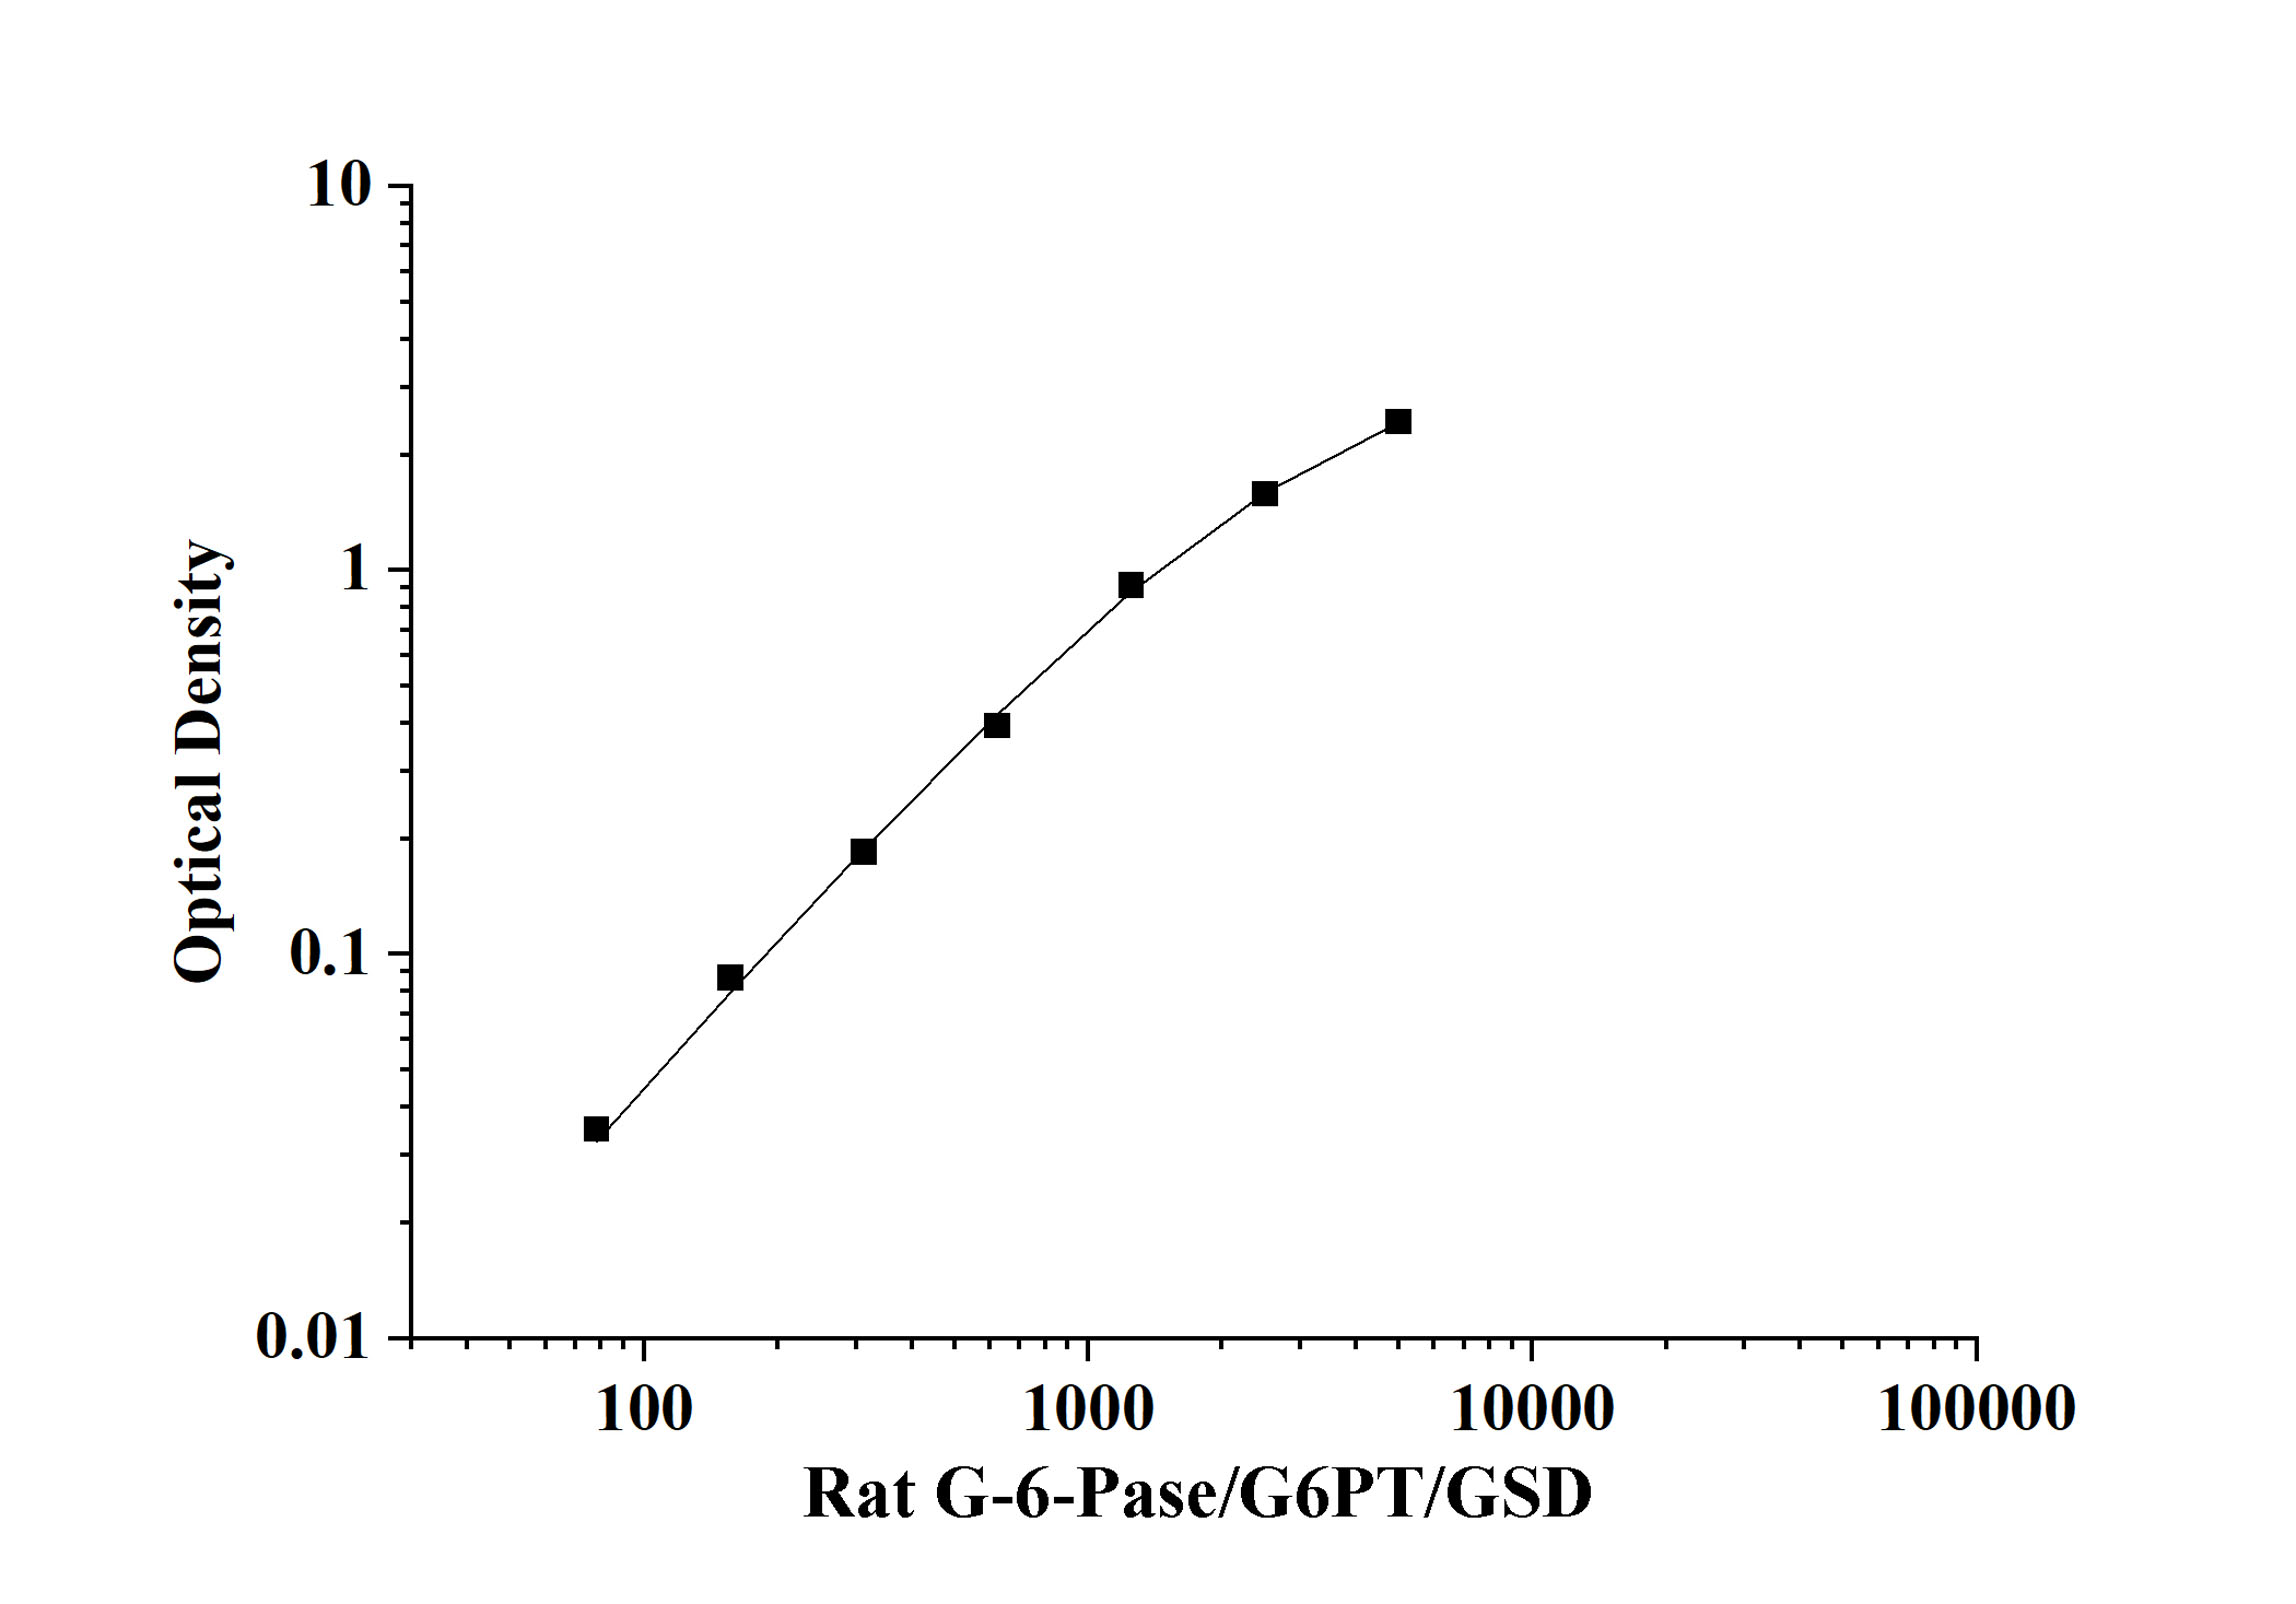 Rat G-6-Pase/G6PT/GSD(Glucose 6 Phosphate) ELISA Kit